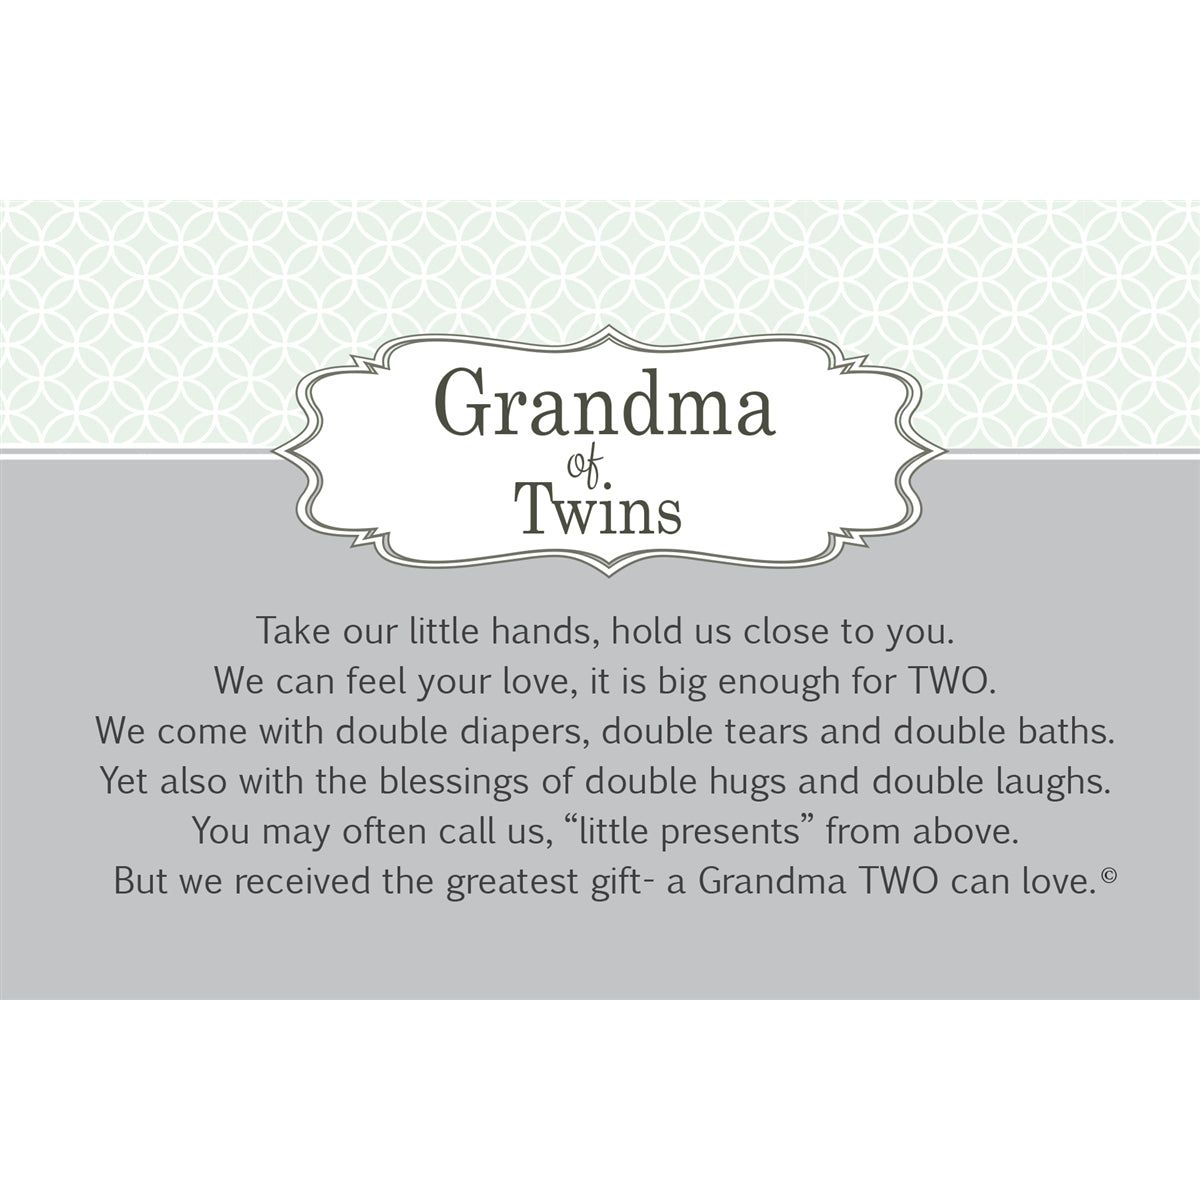 Grandma of Twins artwork and sentiment.